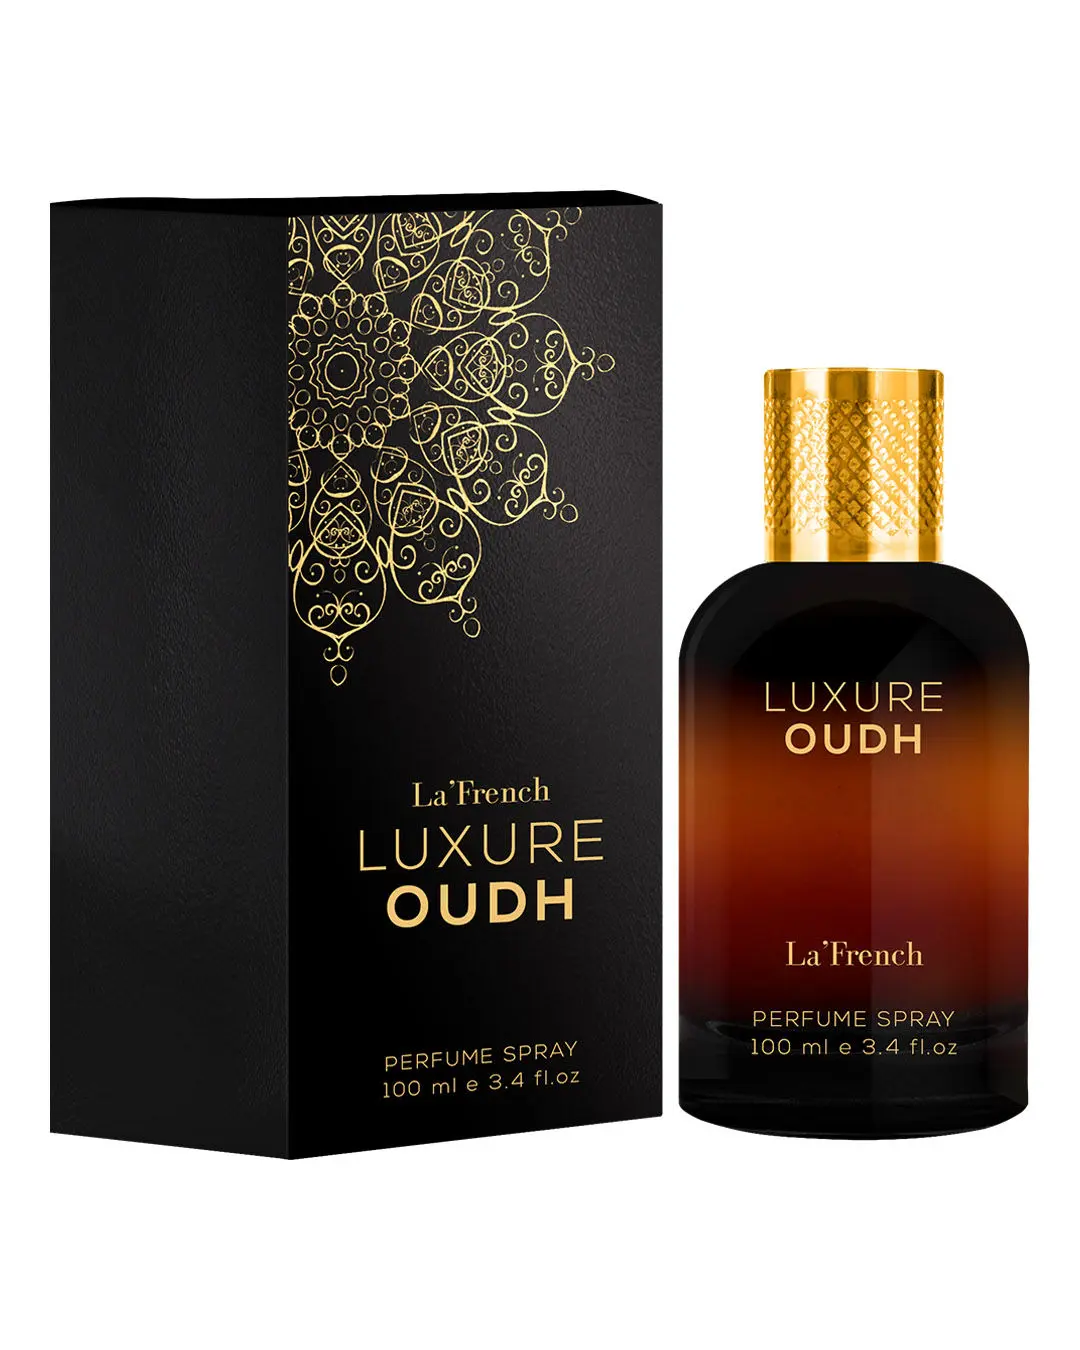 Luxure Oudh Perfume by LA'FRENCH (100 ml)